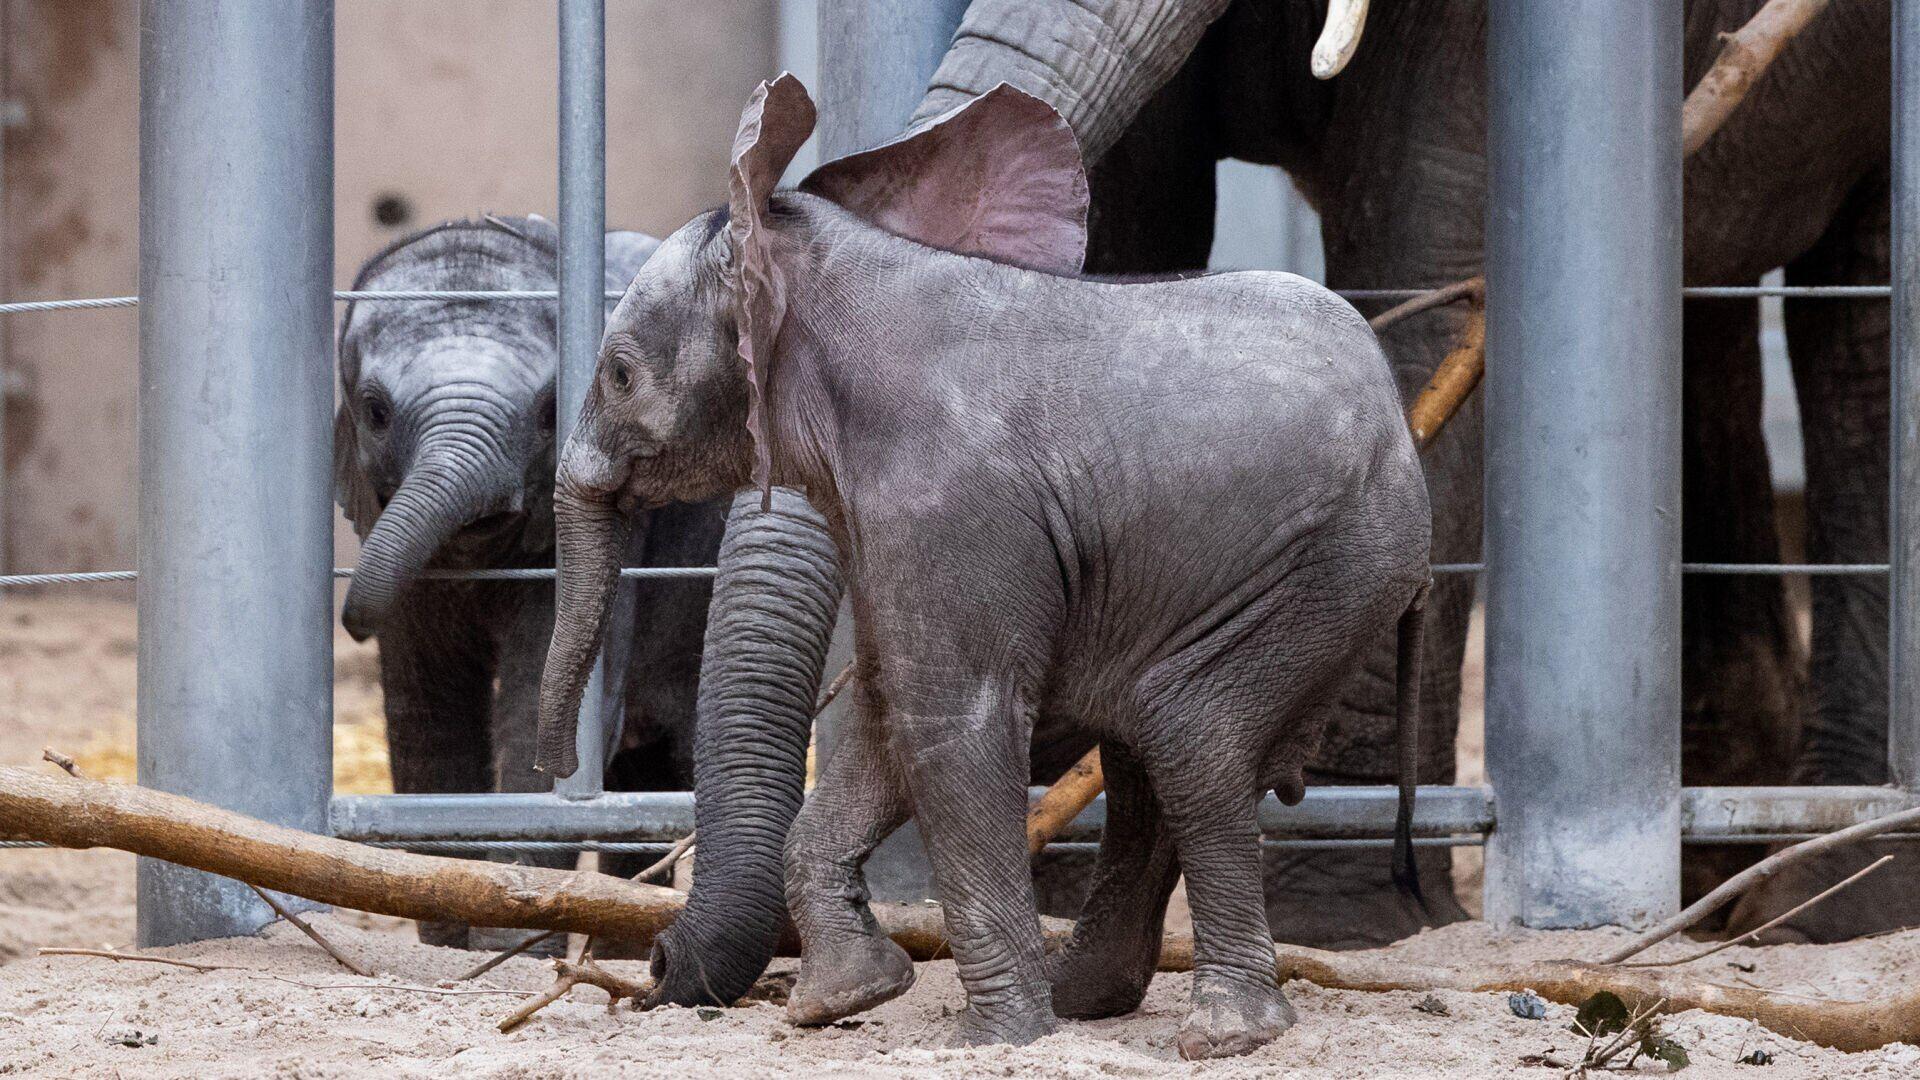 Omaha zoo expecting fourth baby elephant